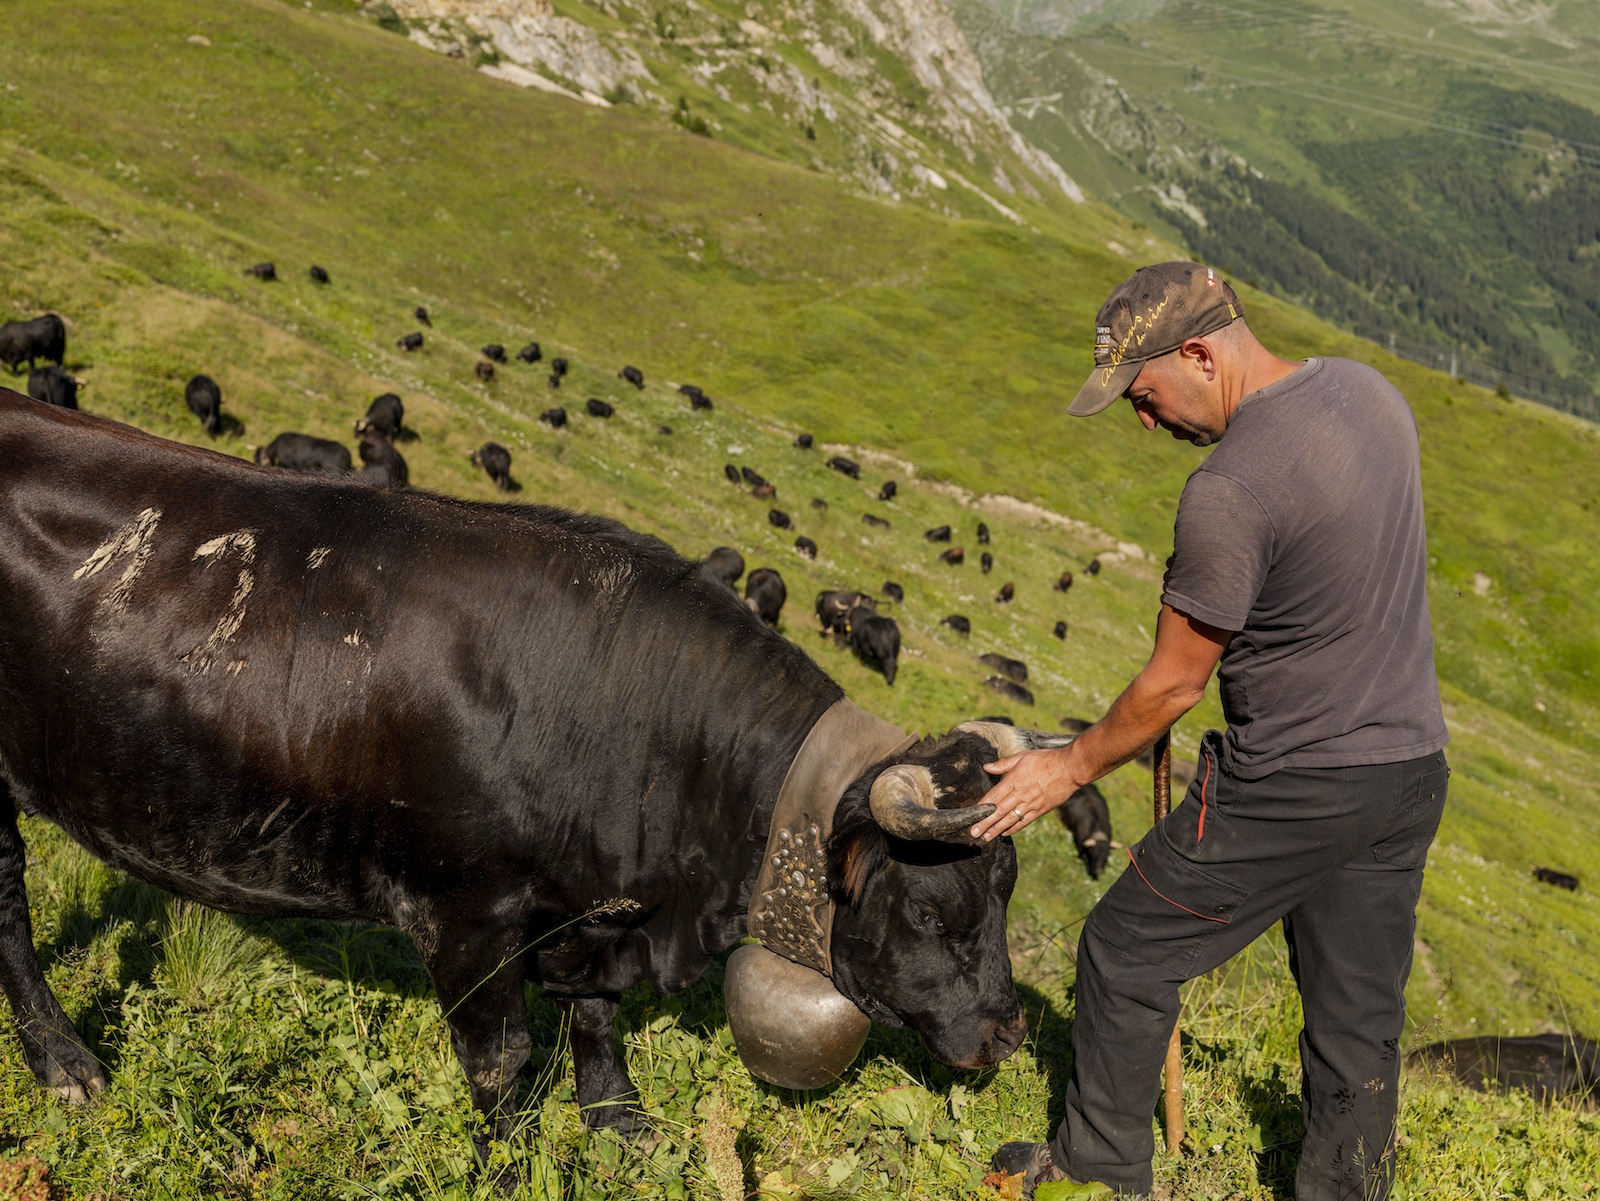 Abilio Correia caressant une vache.